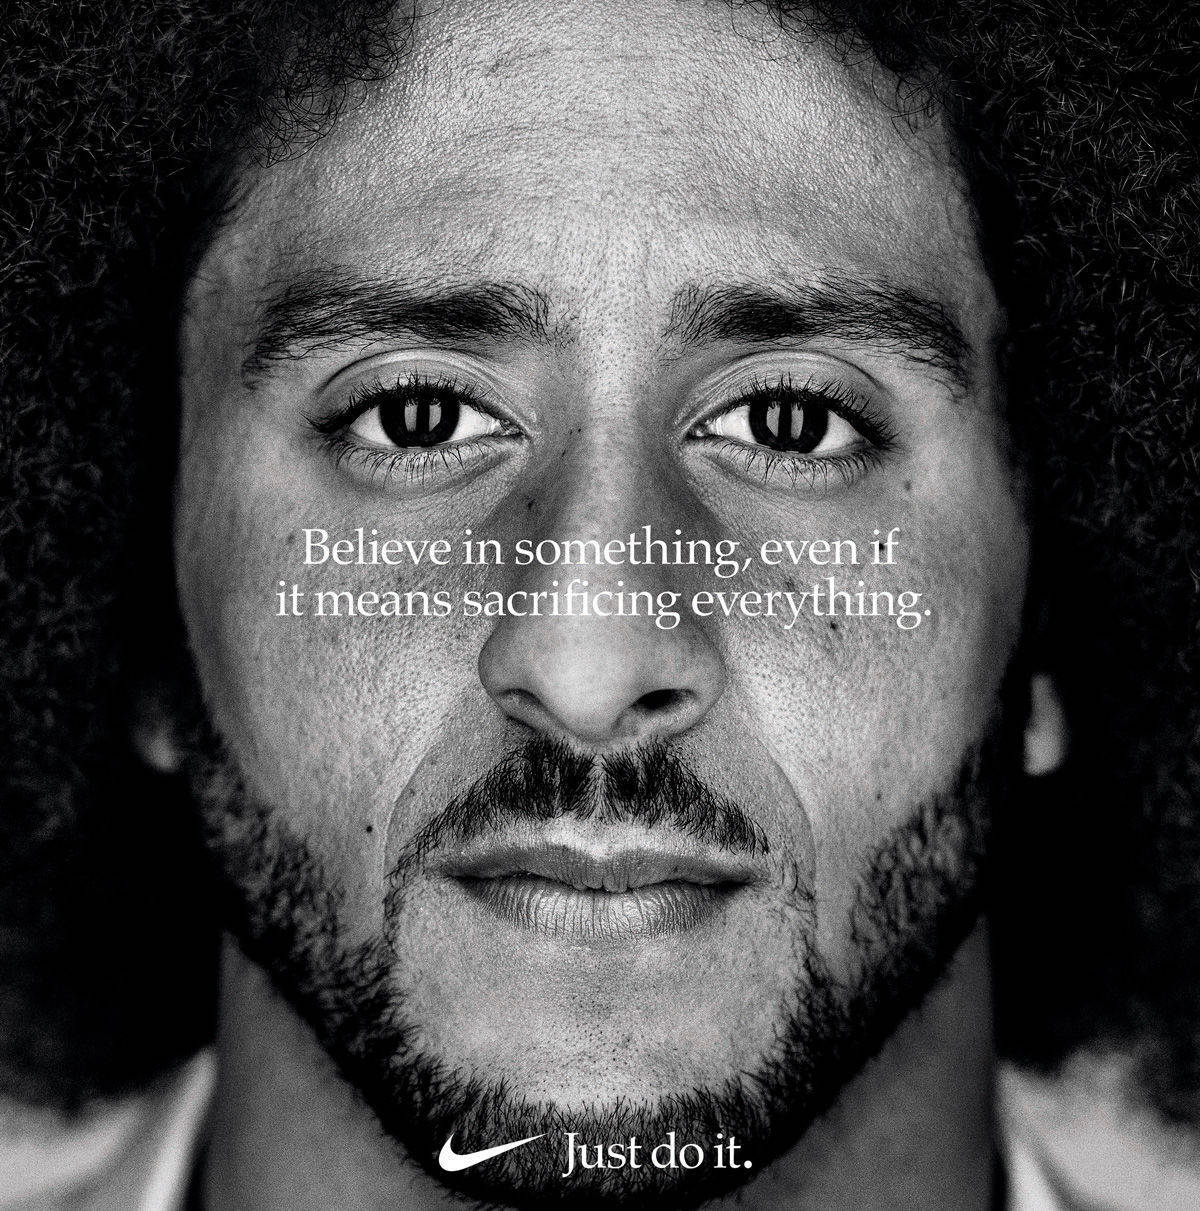 Nike-Kampagne mit Colin Kaepernick: Die berühmteste "Haltungskampagne" des letzten Jahres.